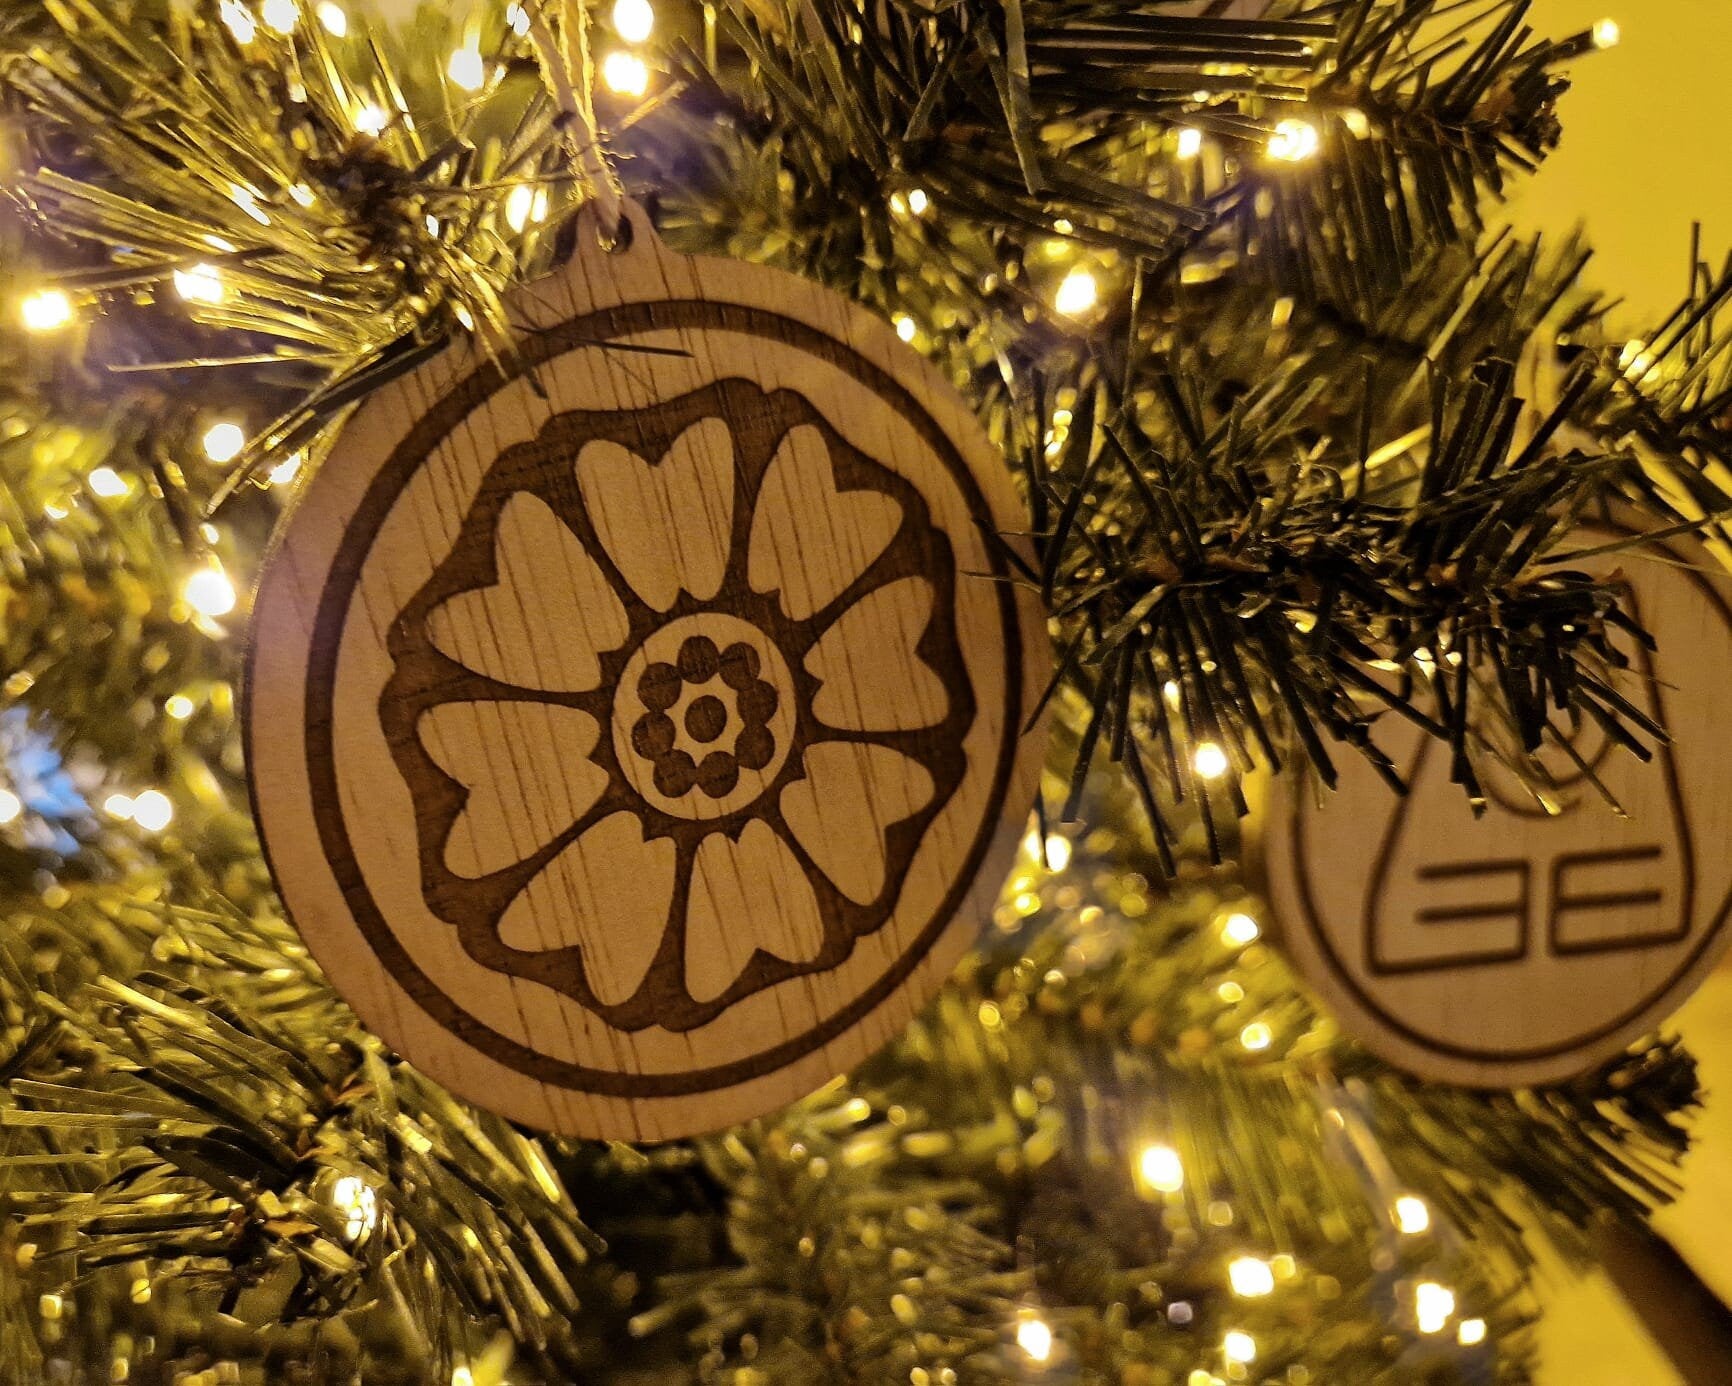 ATLA Inspired Christmas Ornaments Set - Avatar Fan Gift - Home Decor - Present - Housewarming Gift - Avatar the last Airbender, White Lotus